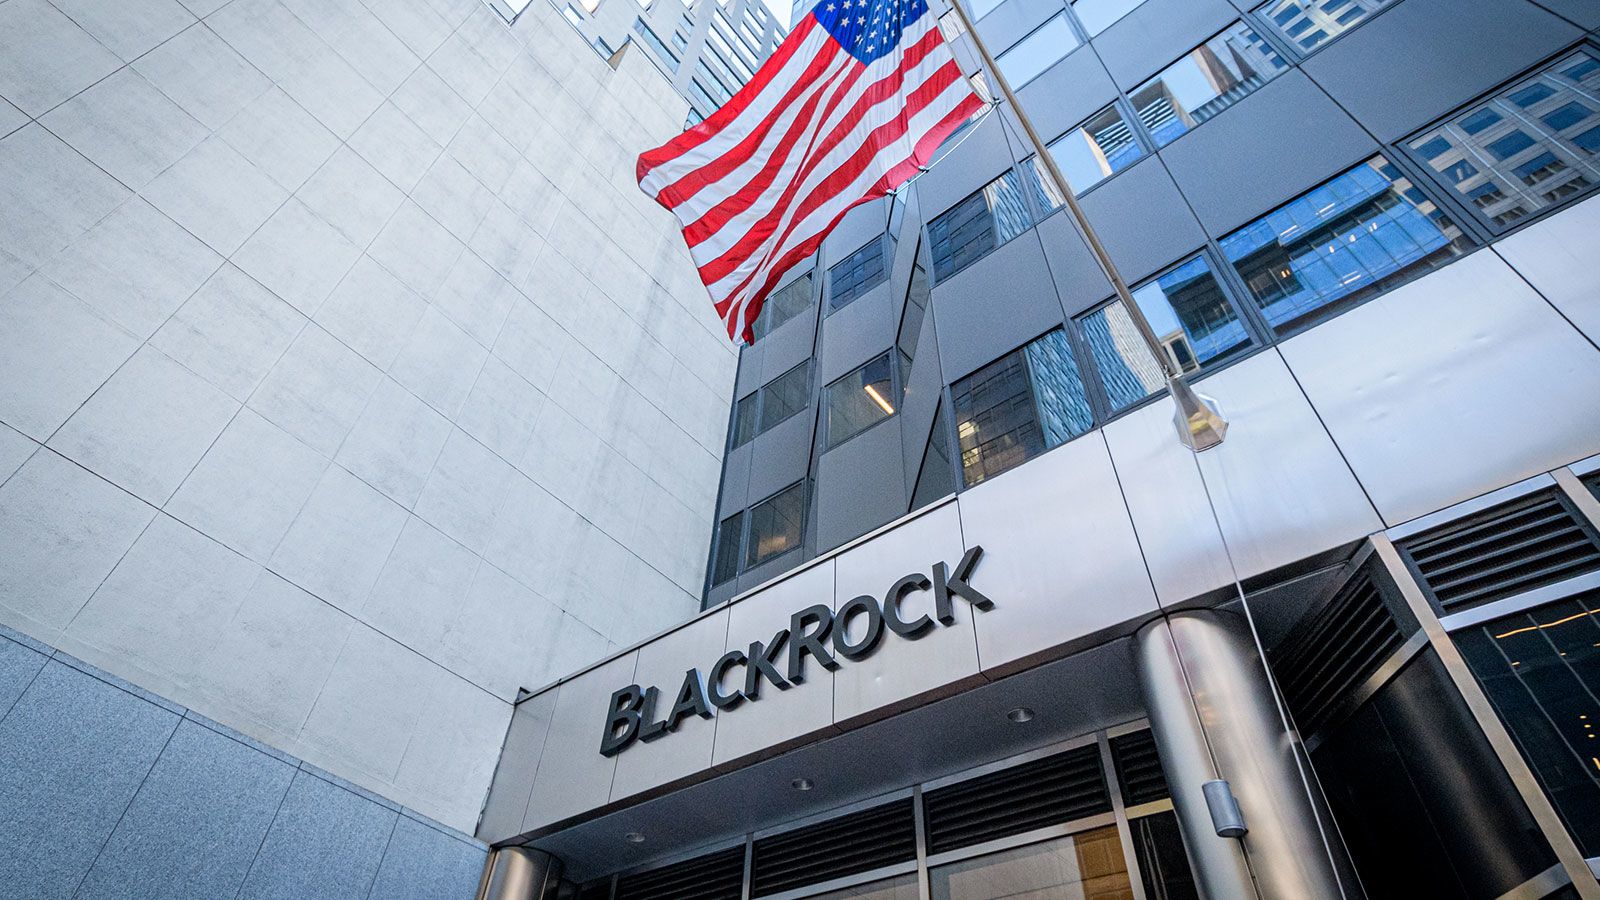 BlackRock is cutting 500 jobs as Wall Street layoffs continue | CNN Business